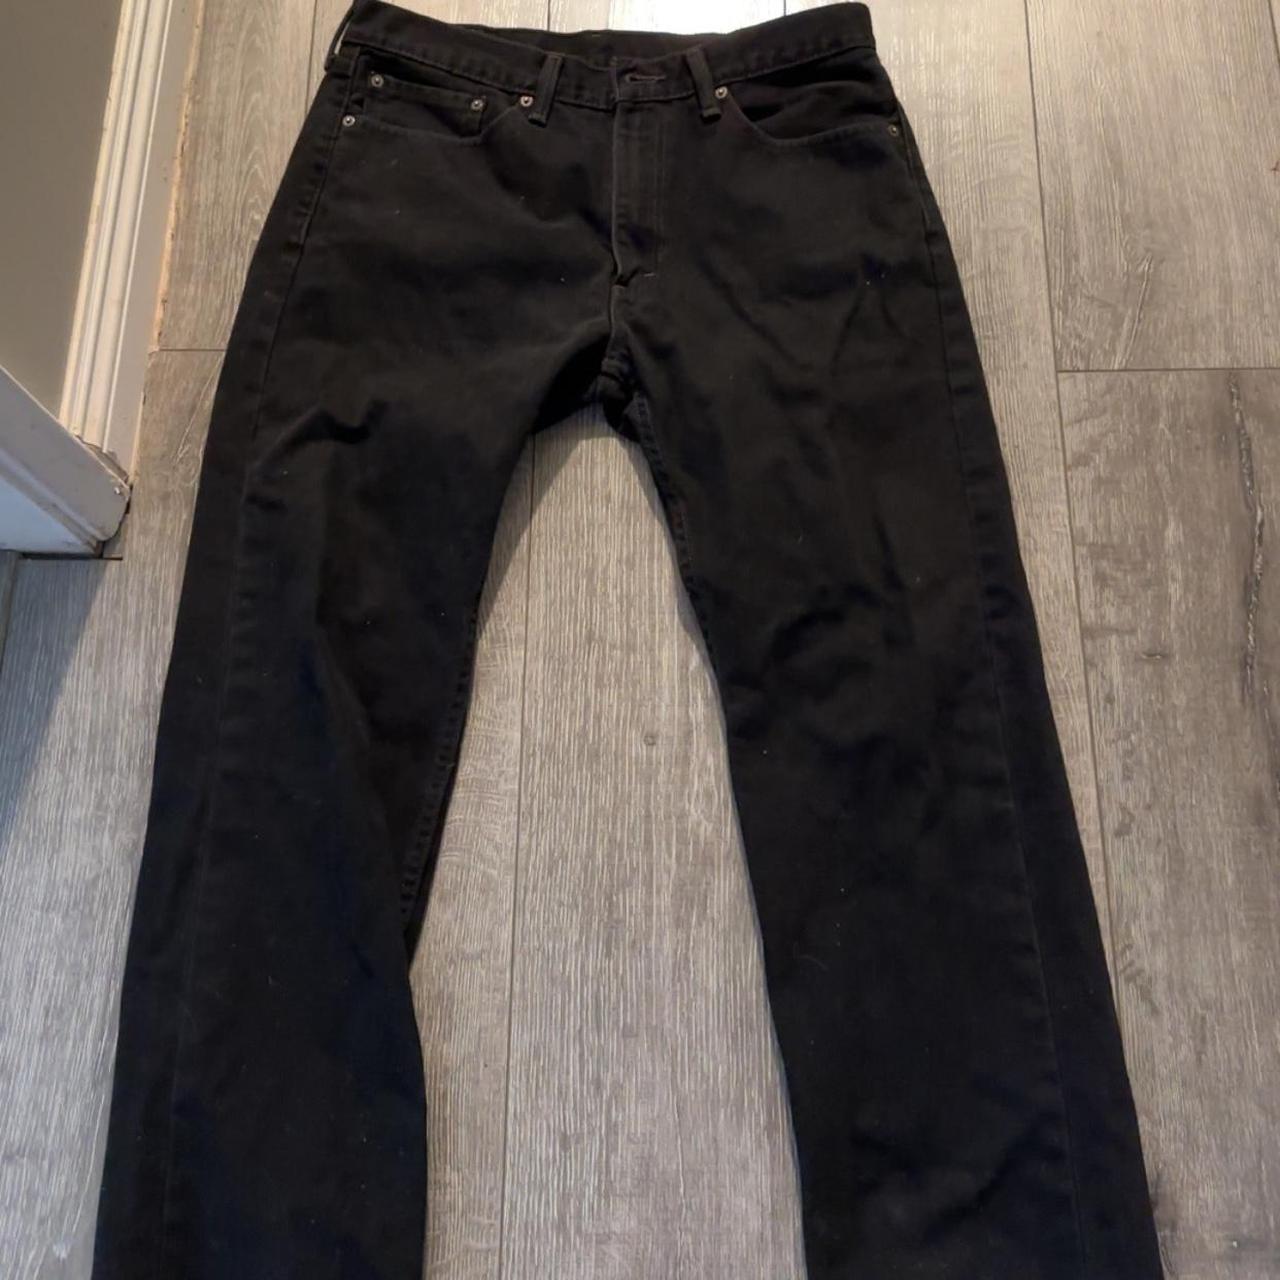 Levi’s 505 black jeans. Size 34x30. never worn before - Depop